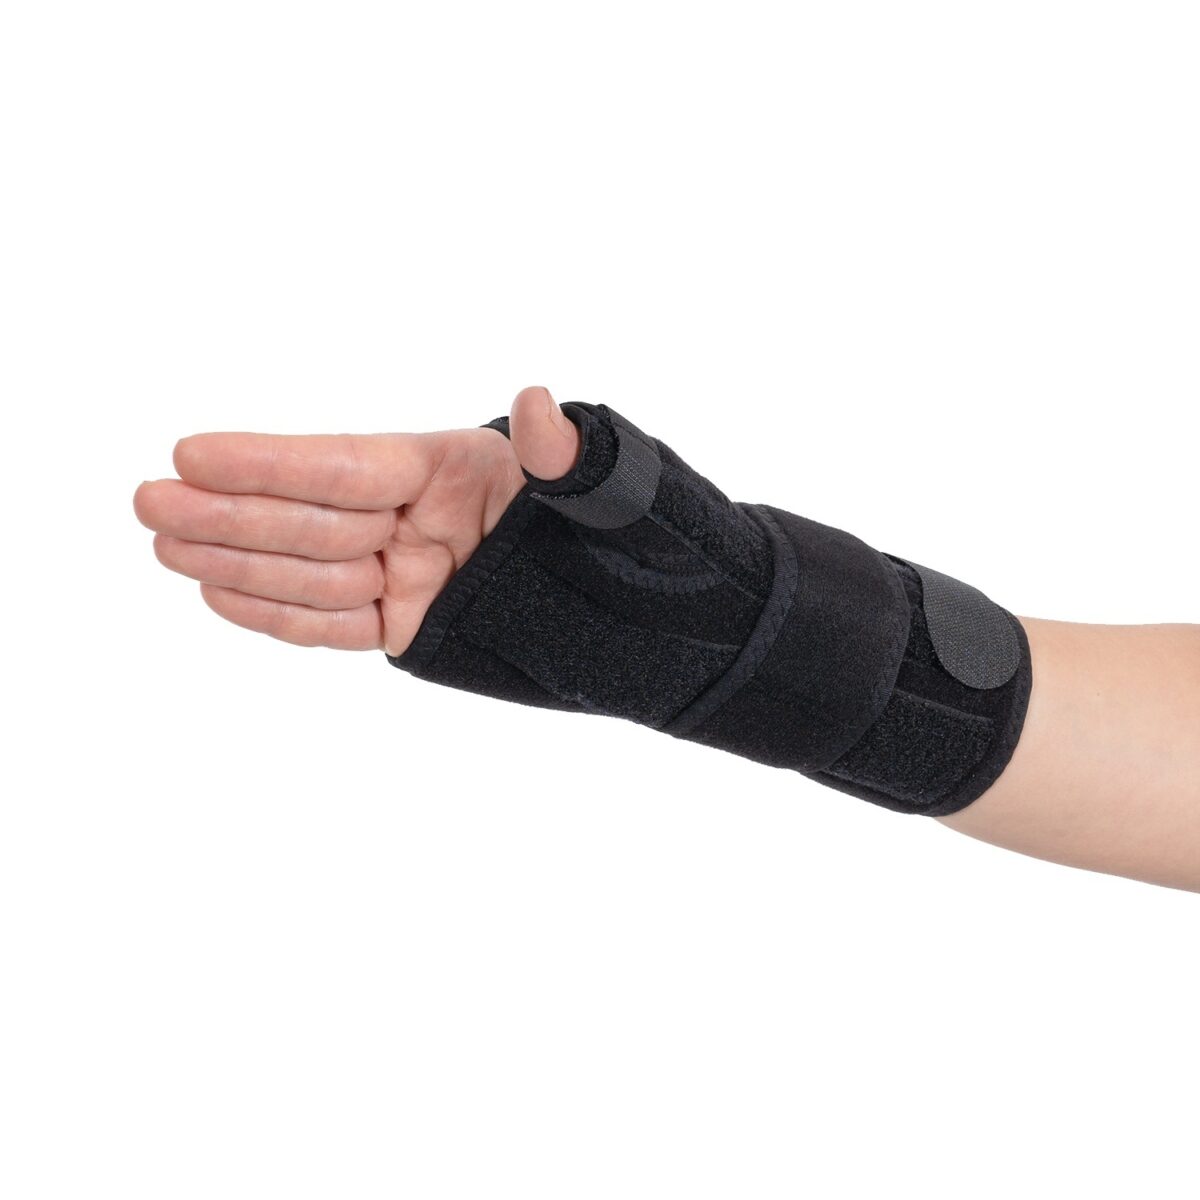 wingmed orthopedic equipments W319 wrist splint with thumb support 38